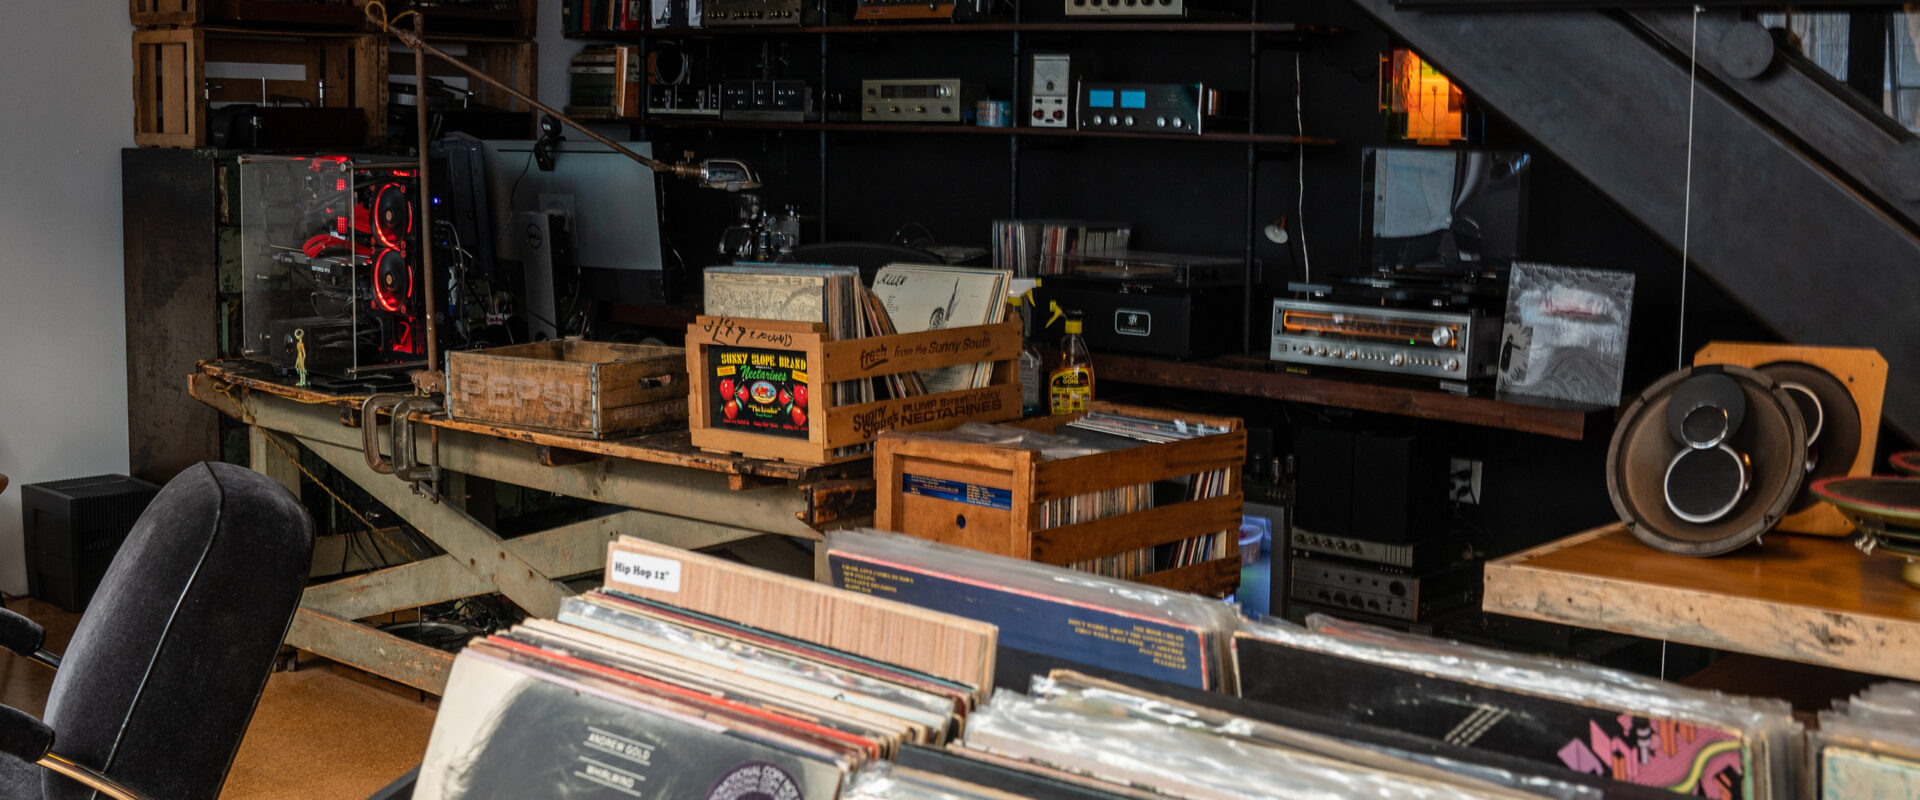 The interior of a record shop